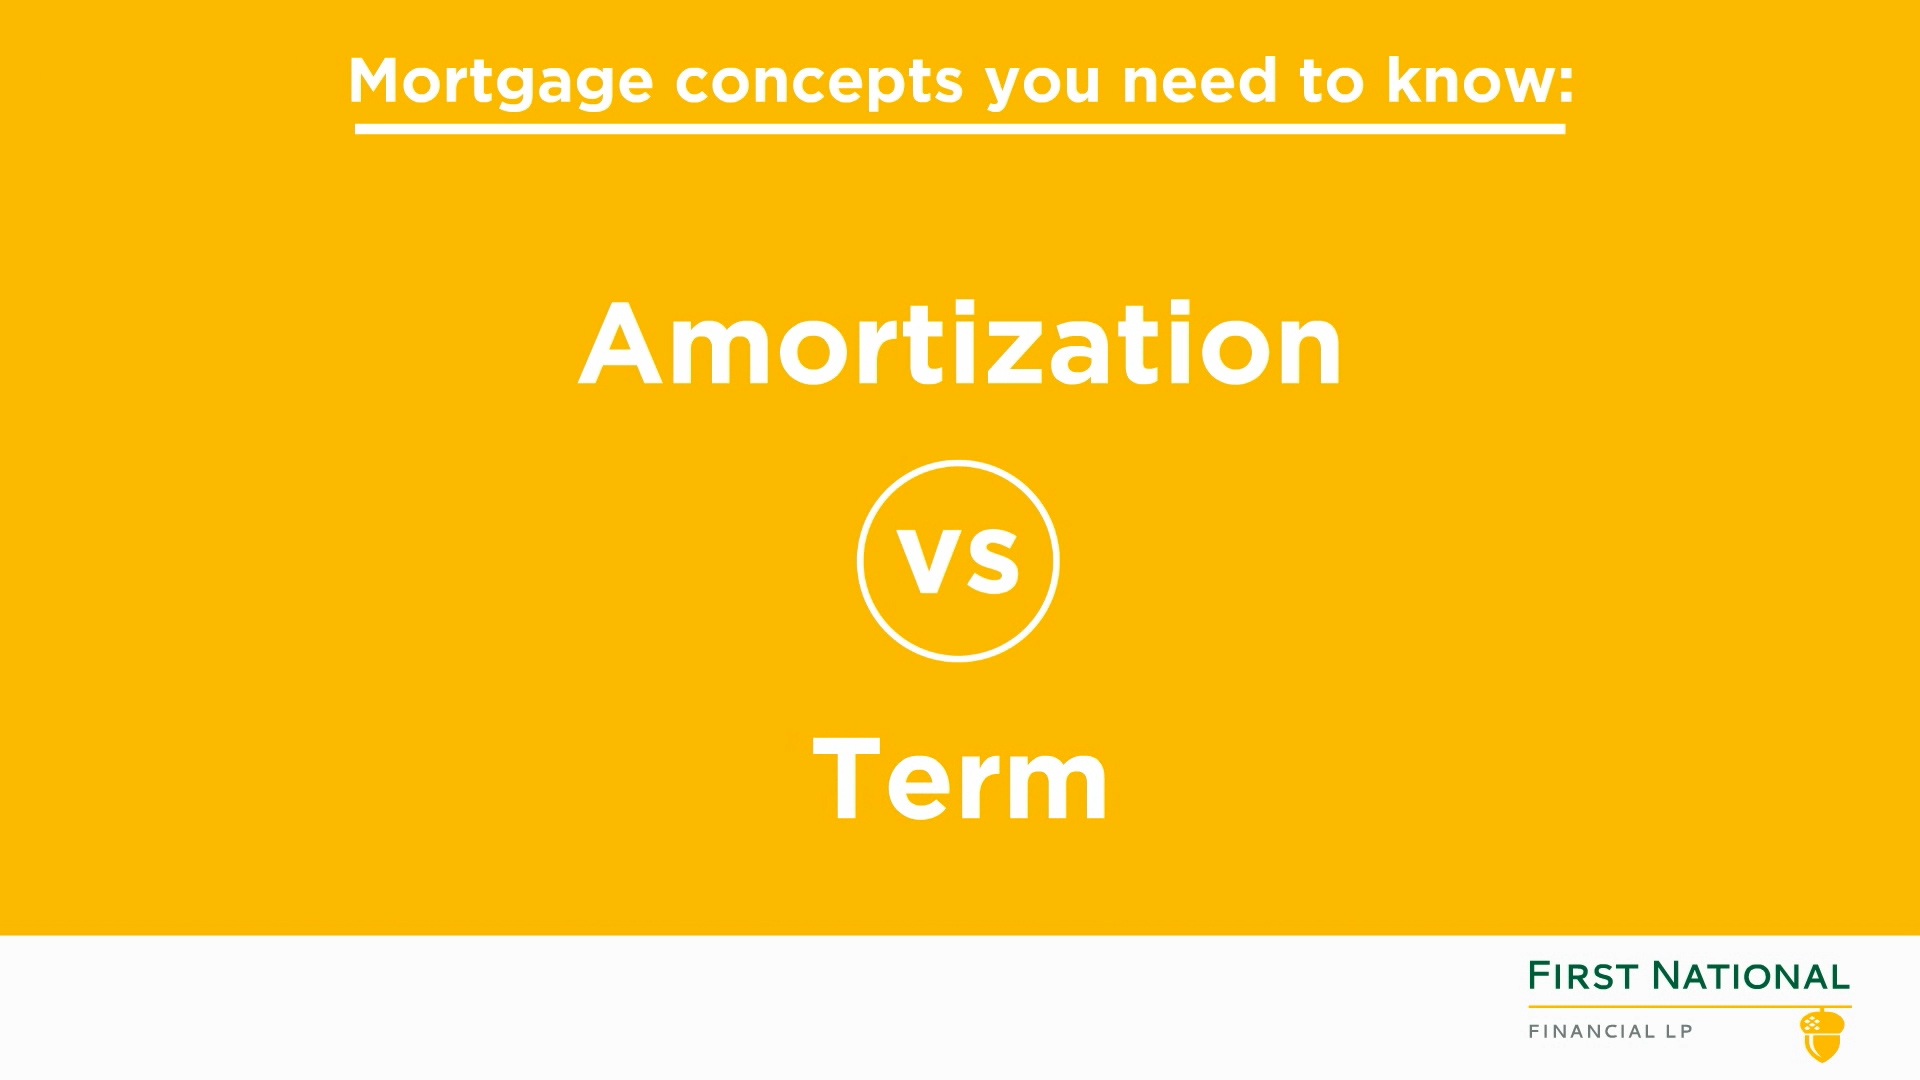 Amortization vs Term